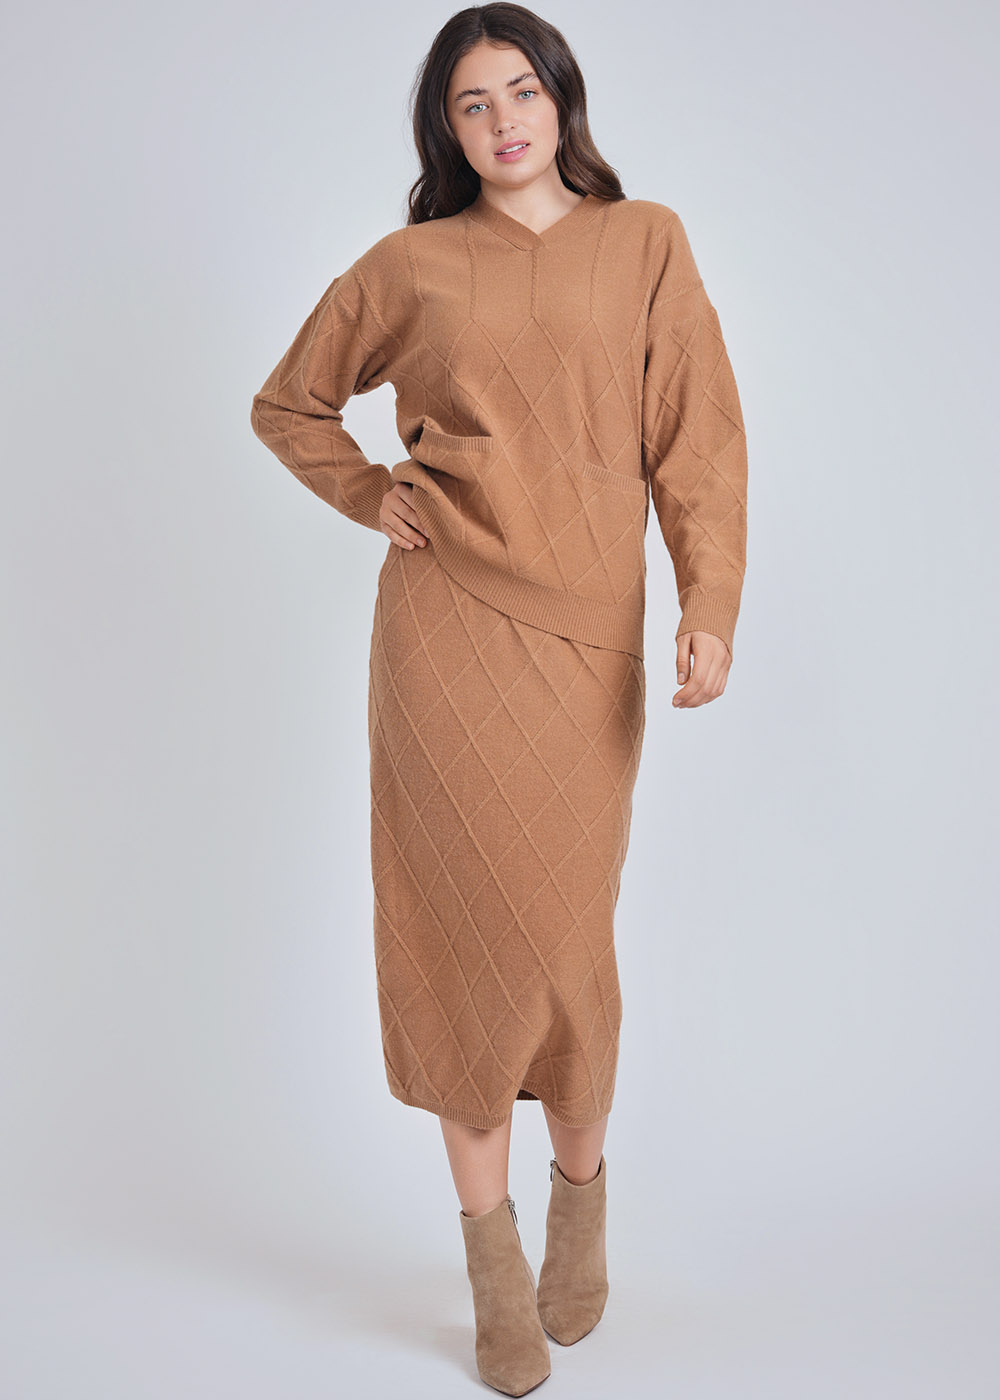 Warm Camel Skirt with Geometric Knit